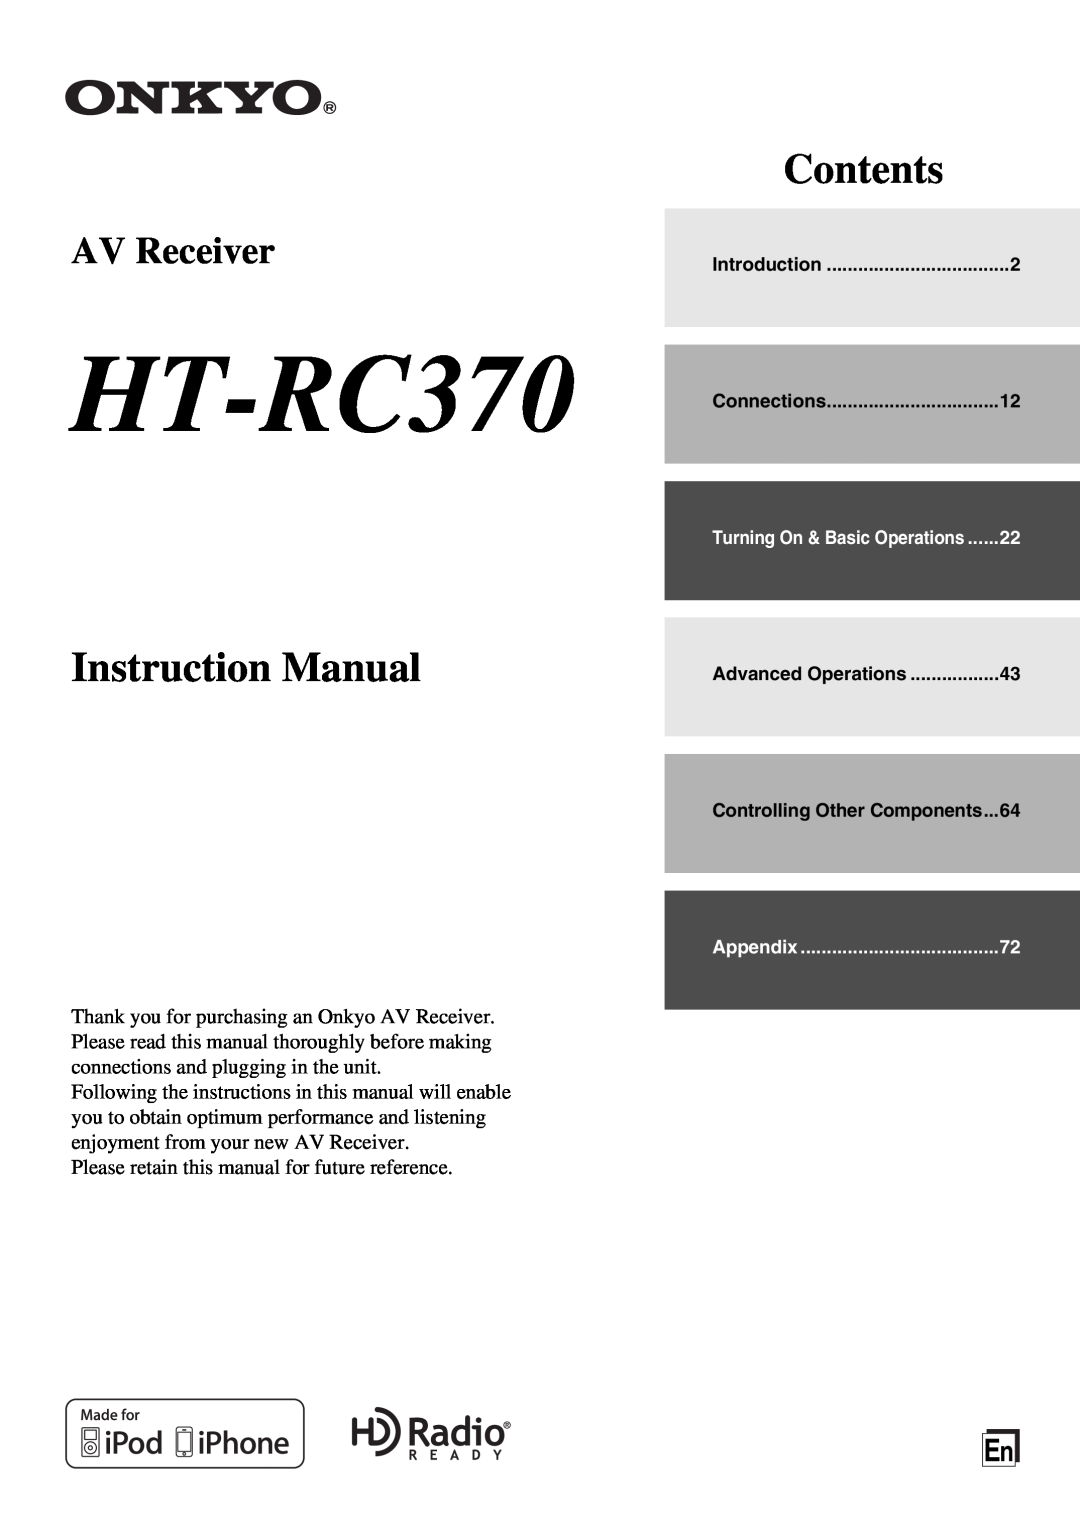 Onkyo HT-RC370 instruction manual Instruction Manual, Contents, AV Receiver 